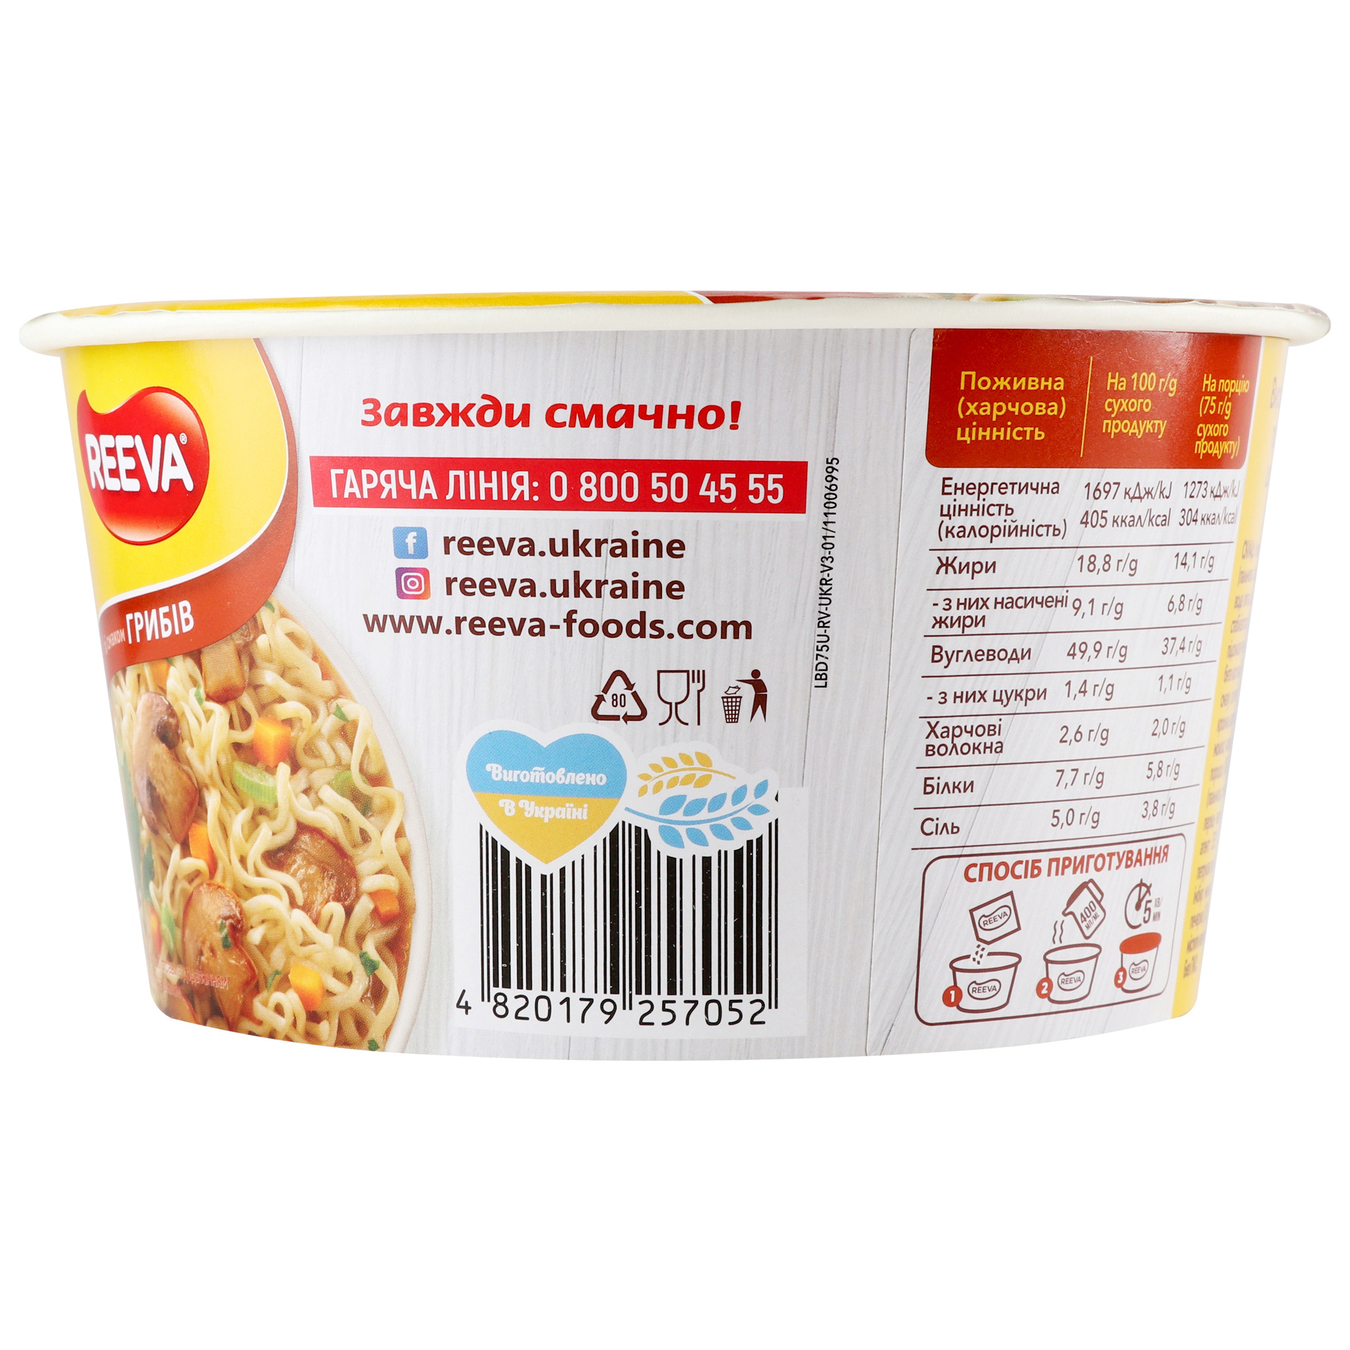 Instant Reeva noodles with mushroom flavor 75g 4